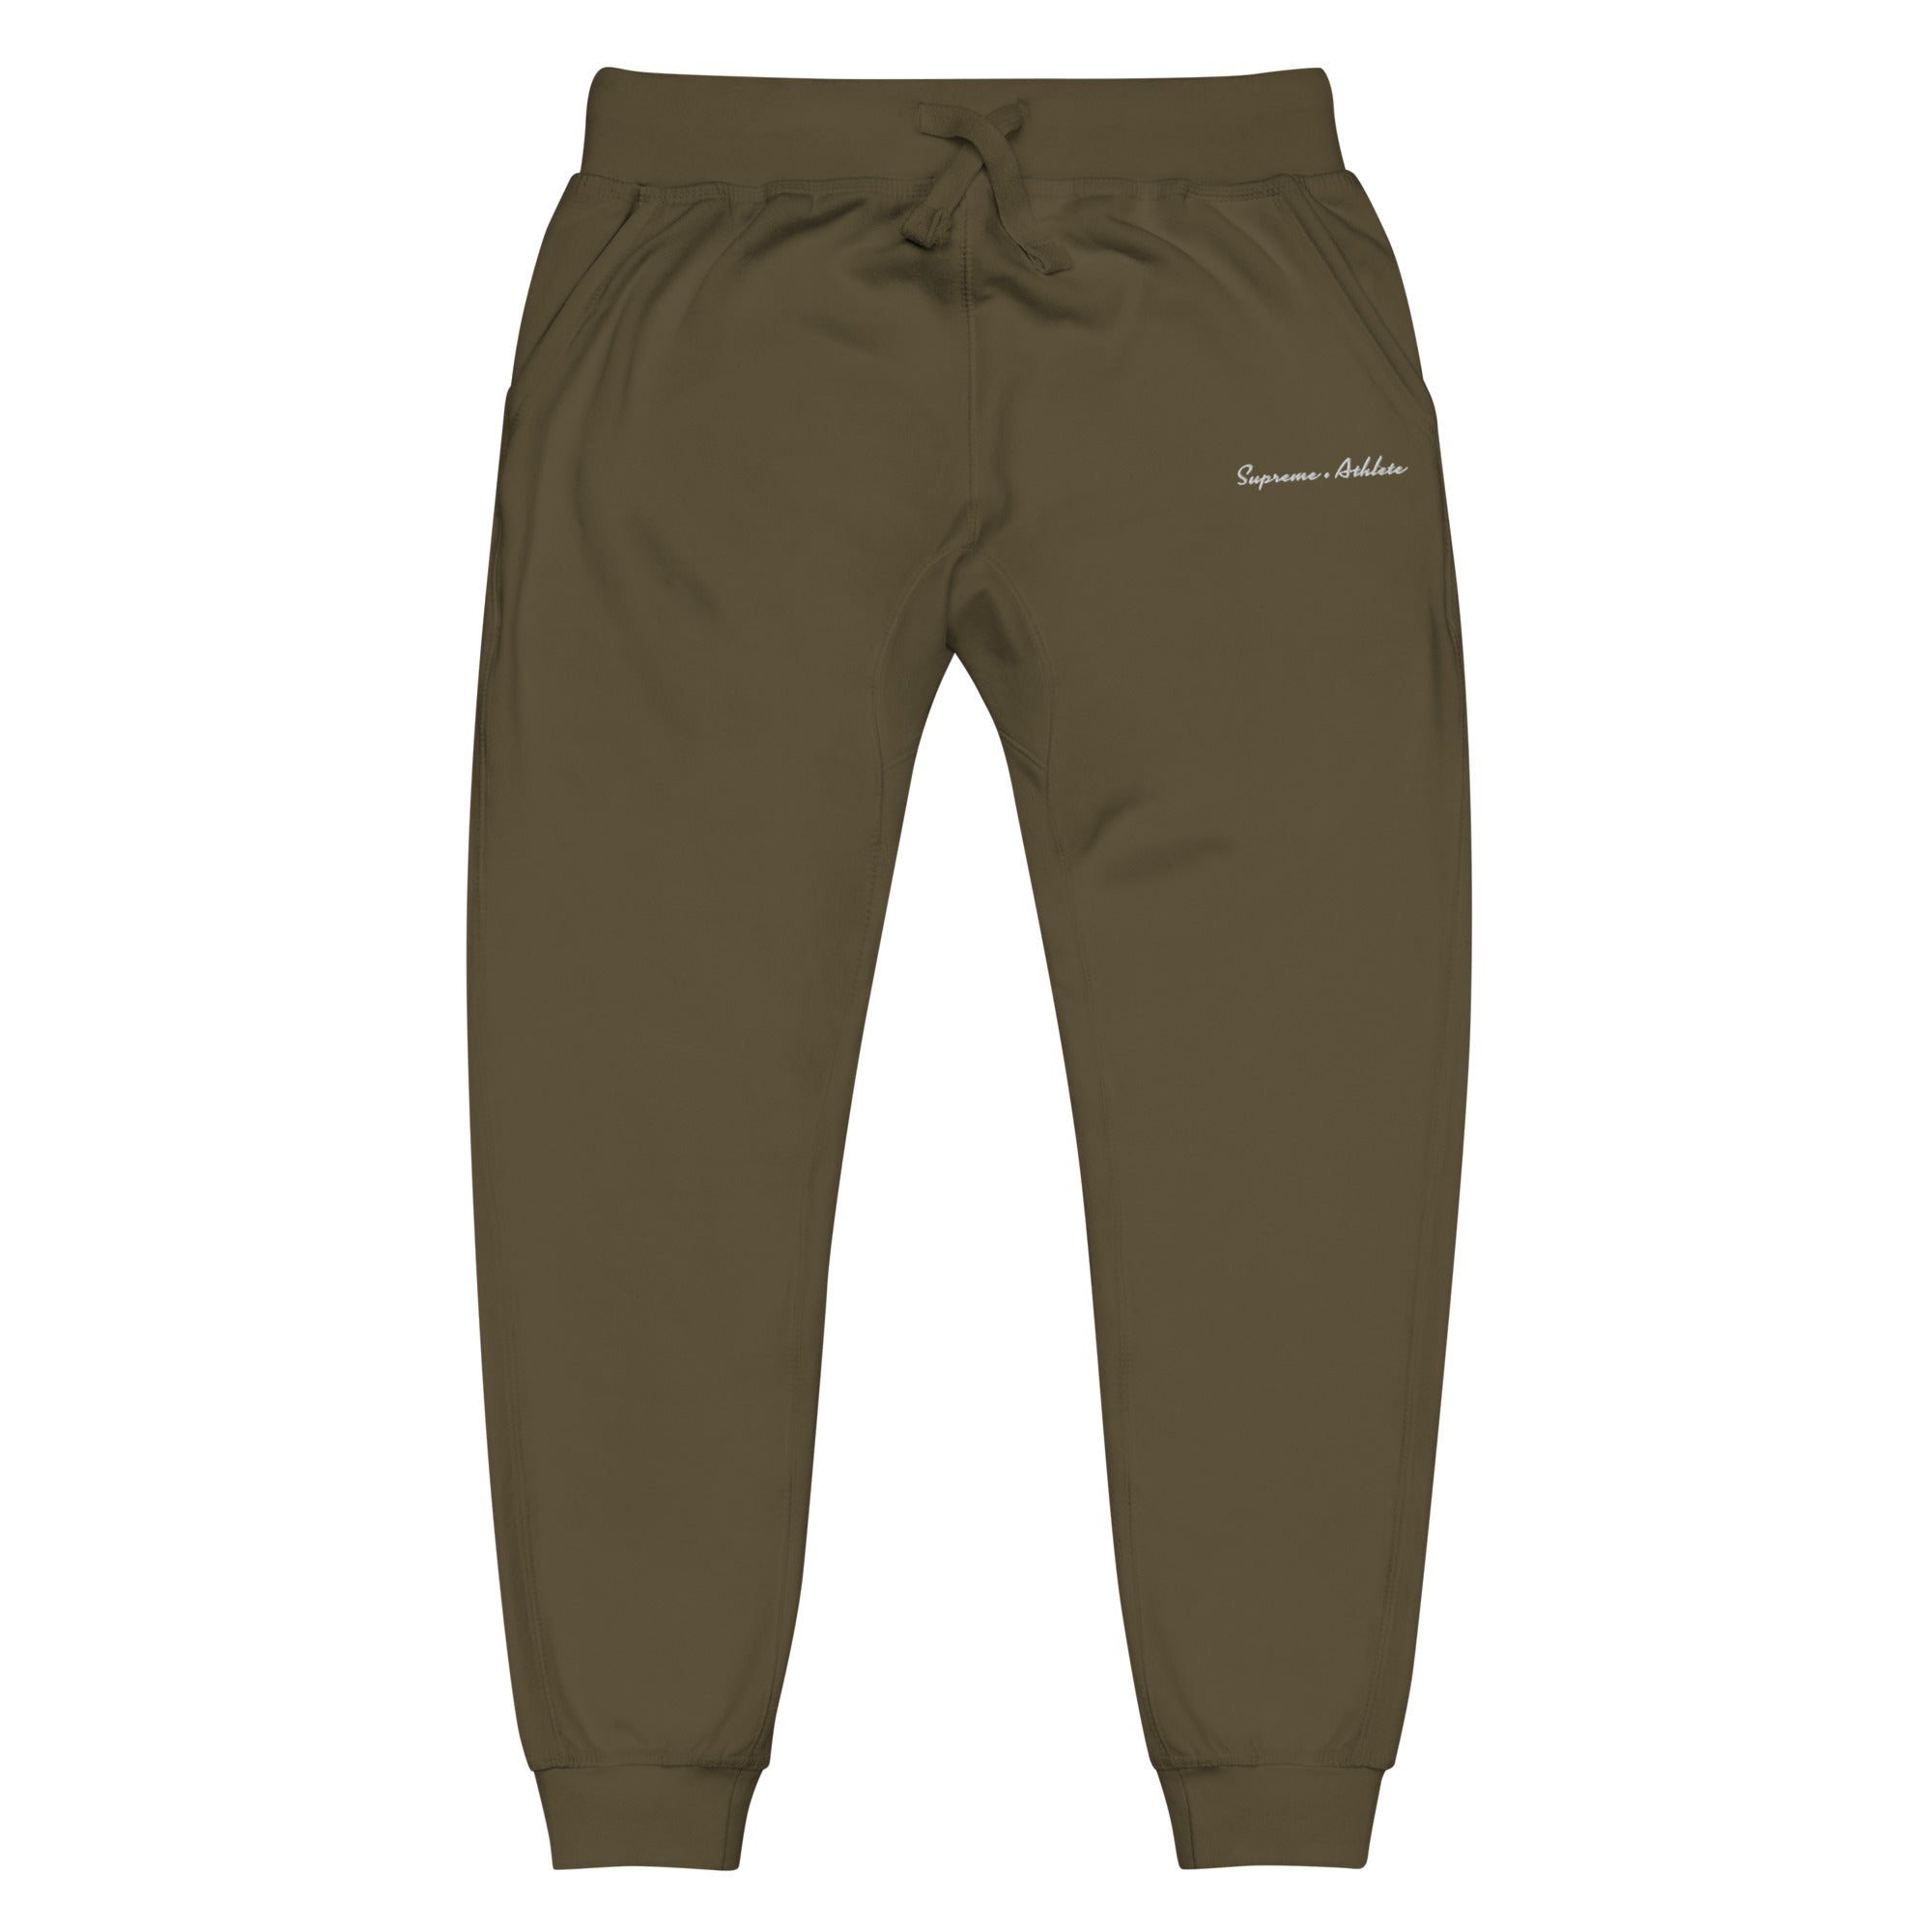 "EXQUISITE" Unisex fleece sweatpants Supreme Athlete Military Green XS 